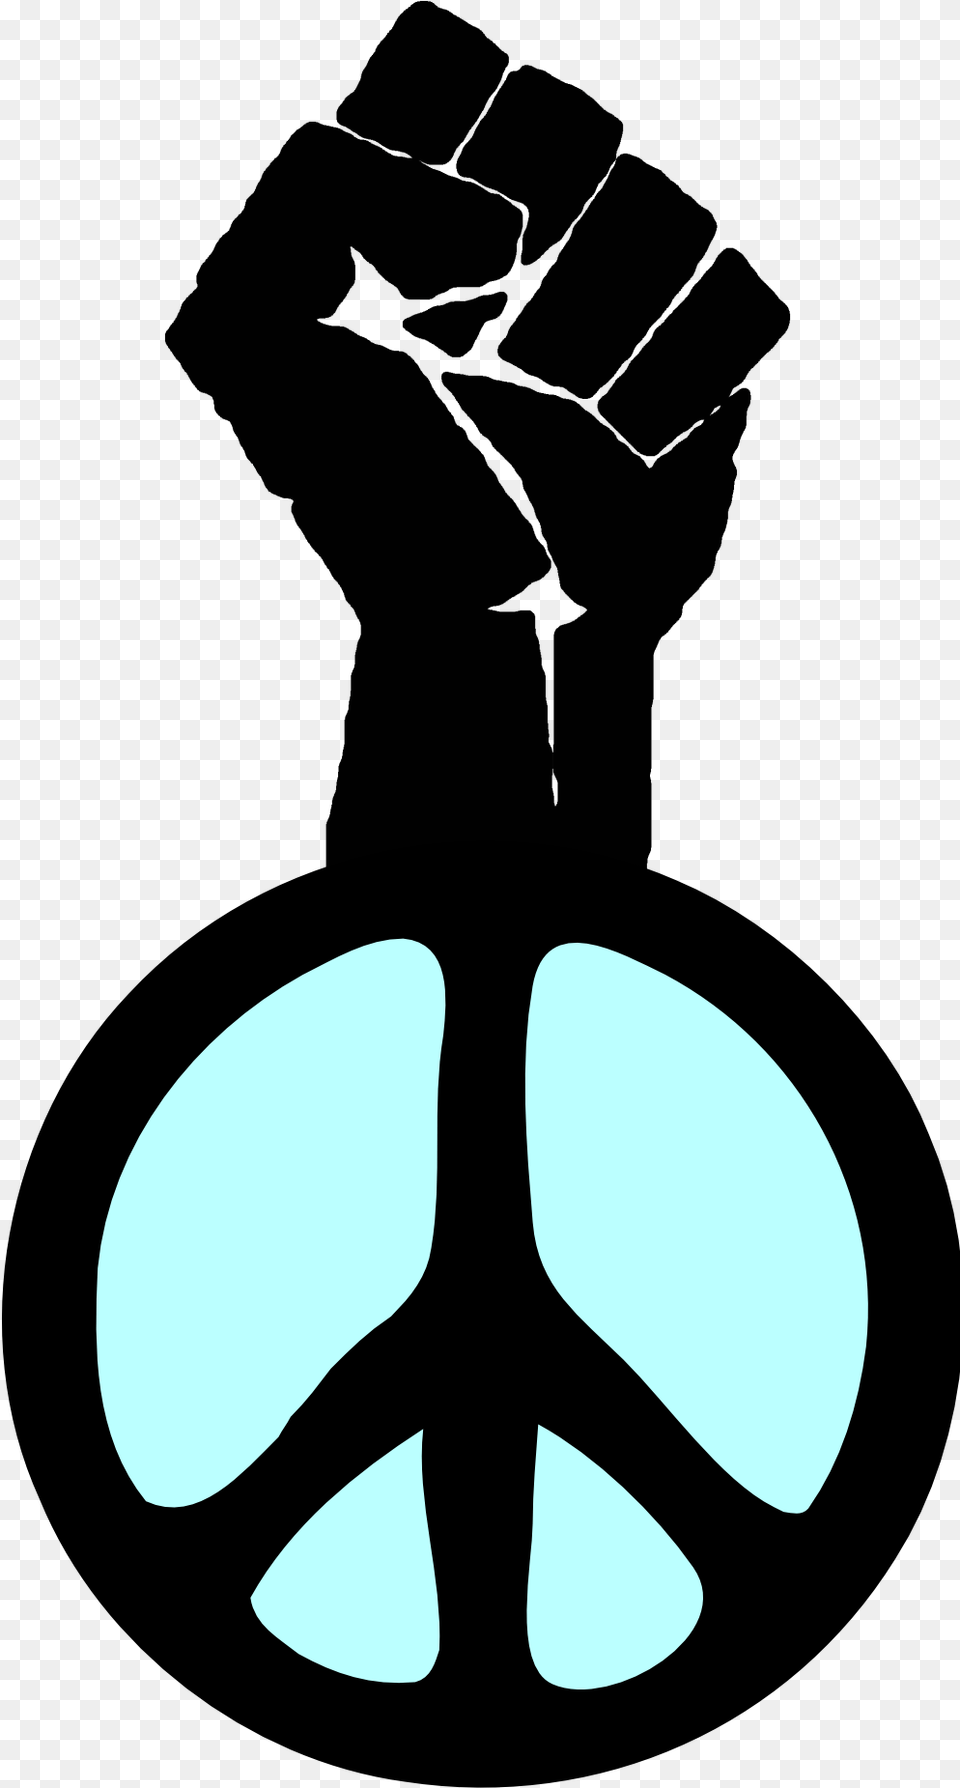 Black Power Fist Peace Sign Transparent Cartoons Nat Turner39s Rebellion Symbol, Accessories, Formal Wear, Tie, Ct Scan Png